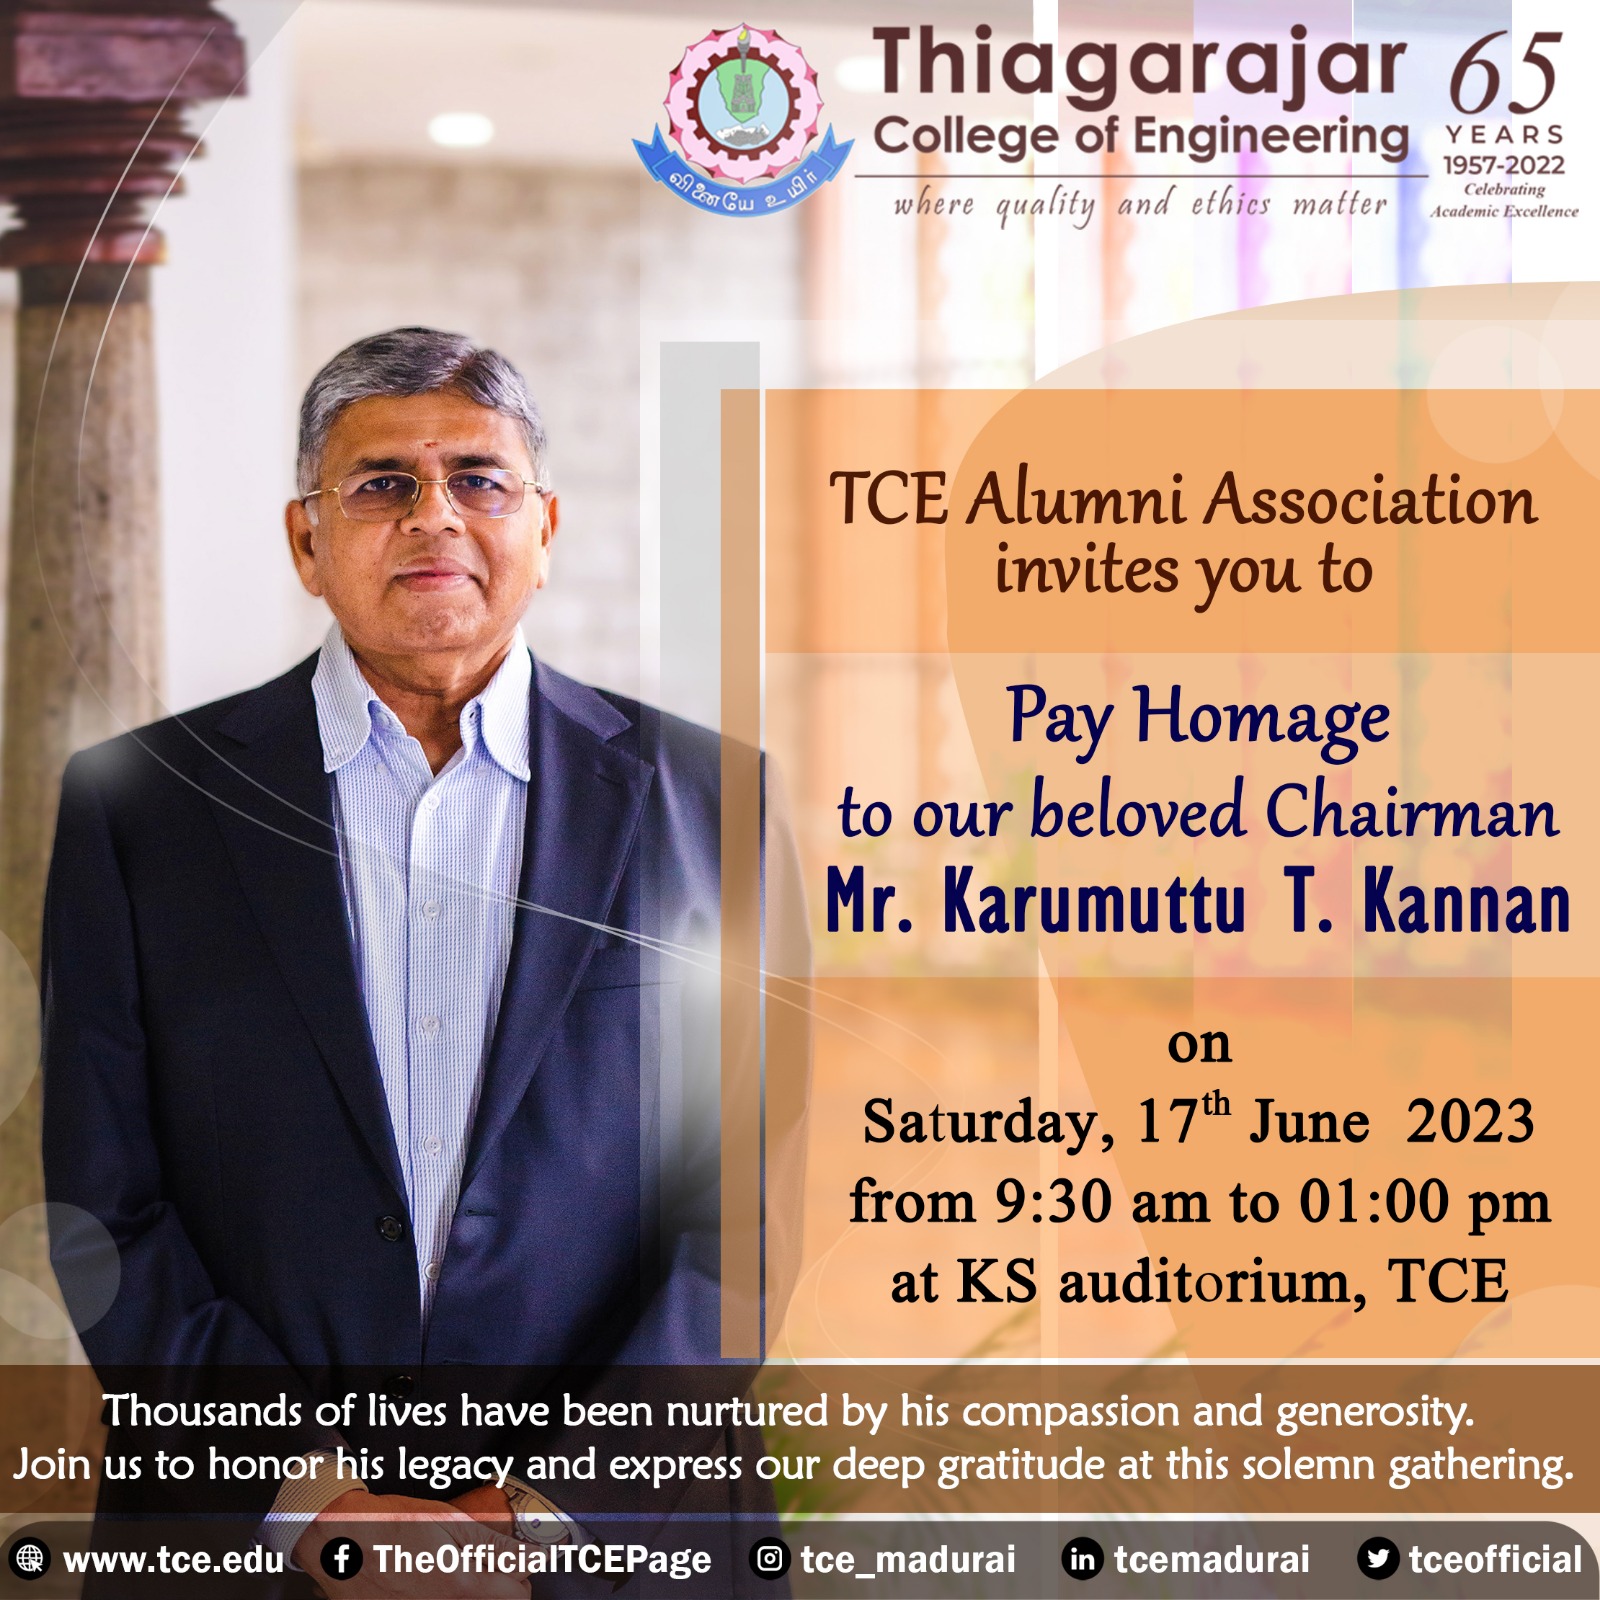 Homage to our beloved Chairman Mr. Karumuttu T. Kannan by TCE Alumni Association